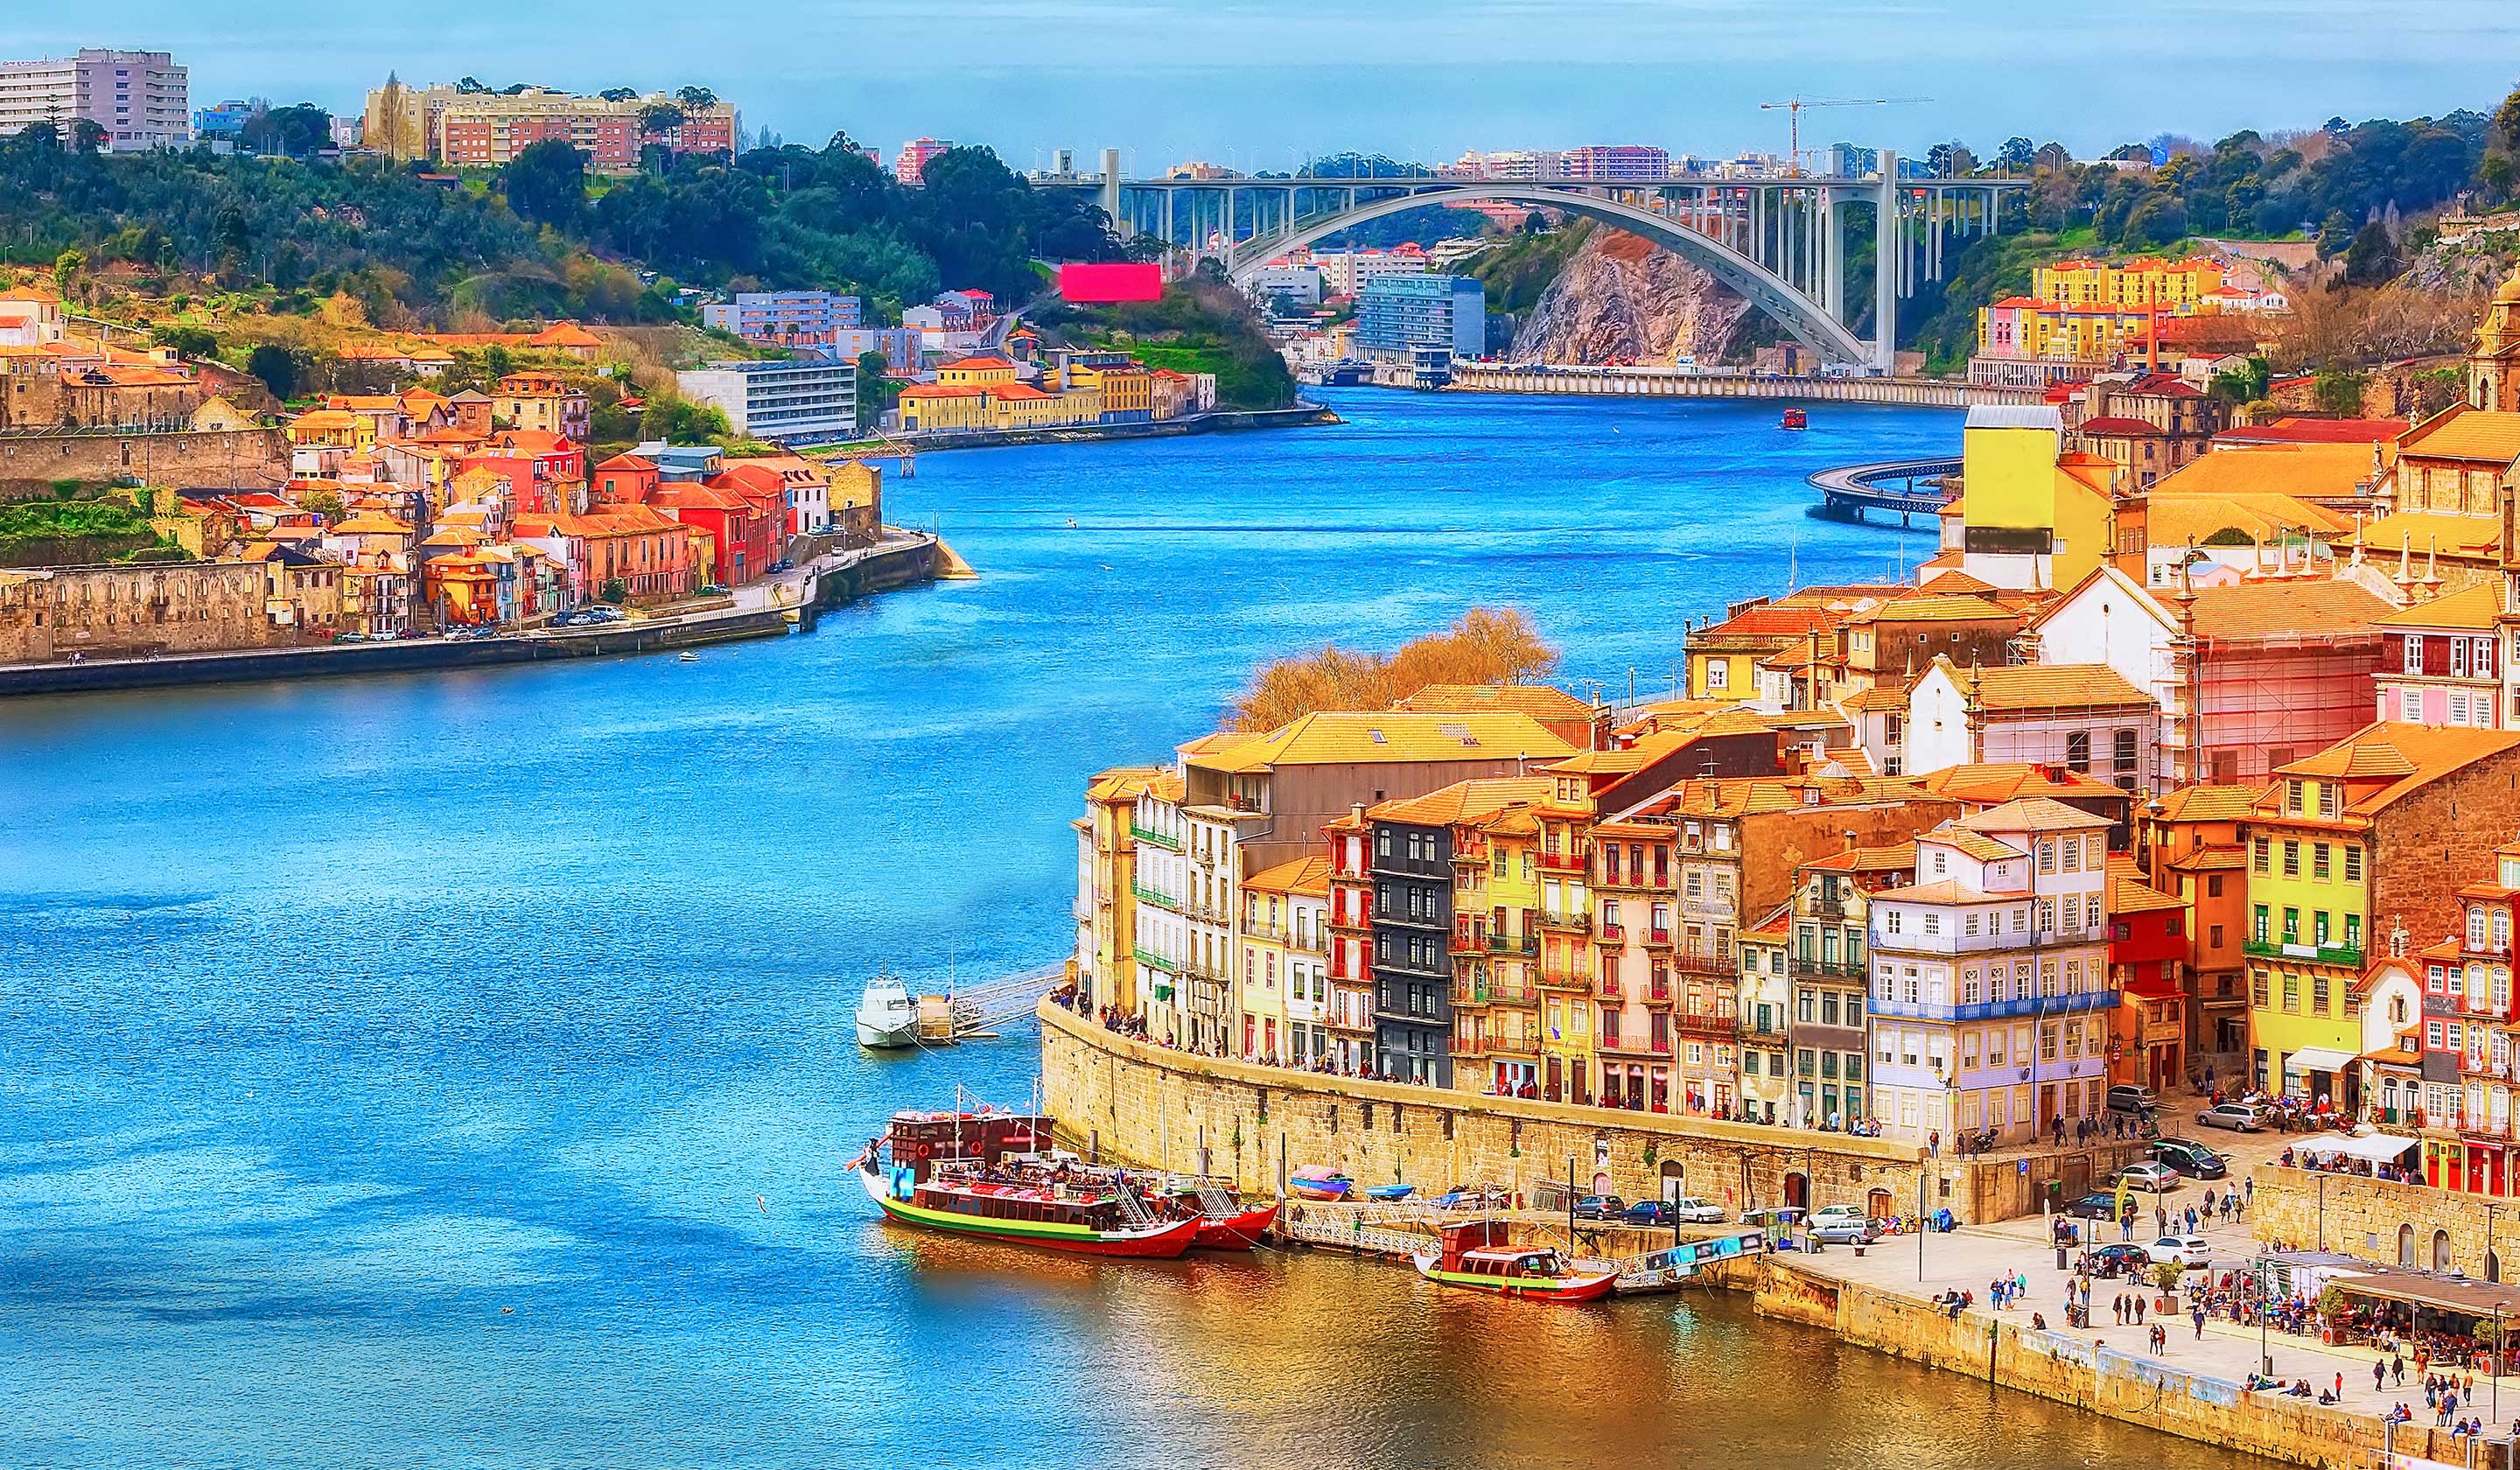 portugal duoro river cruise